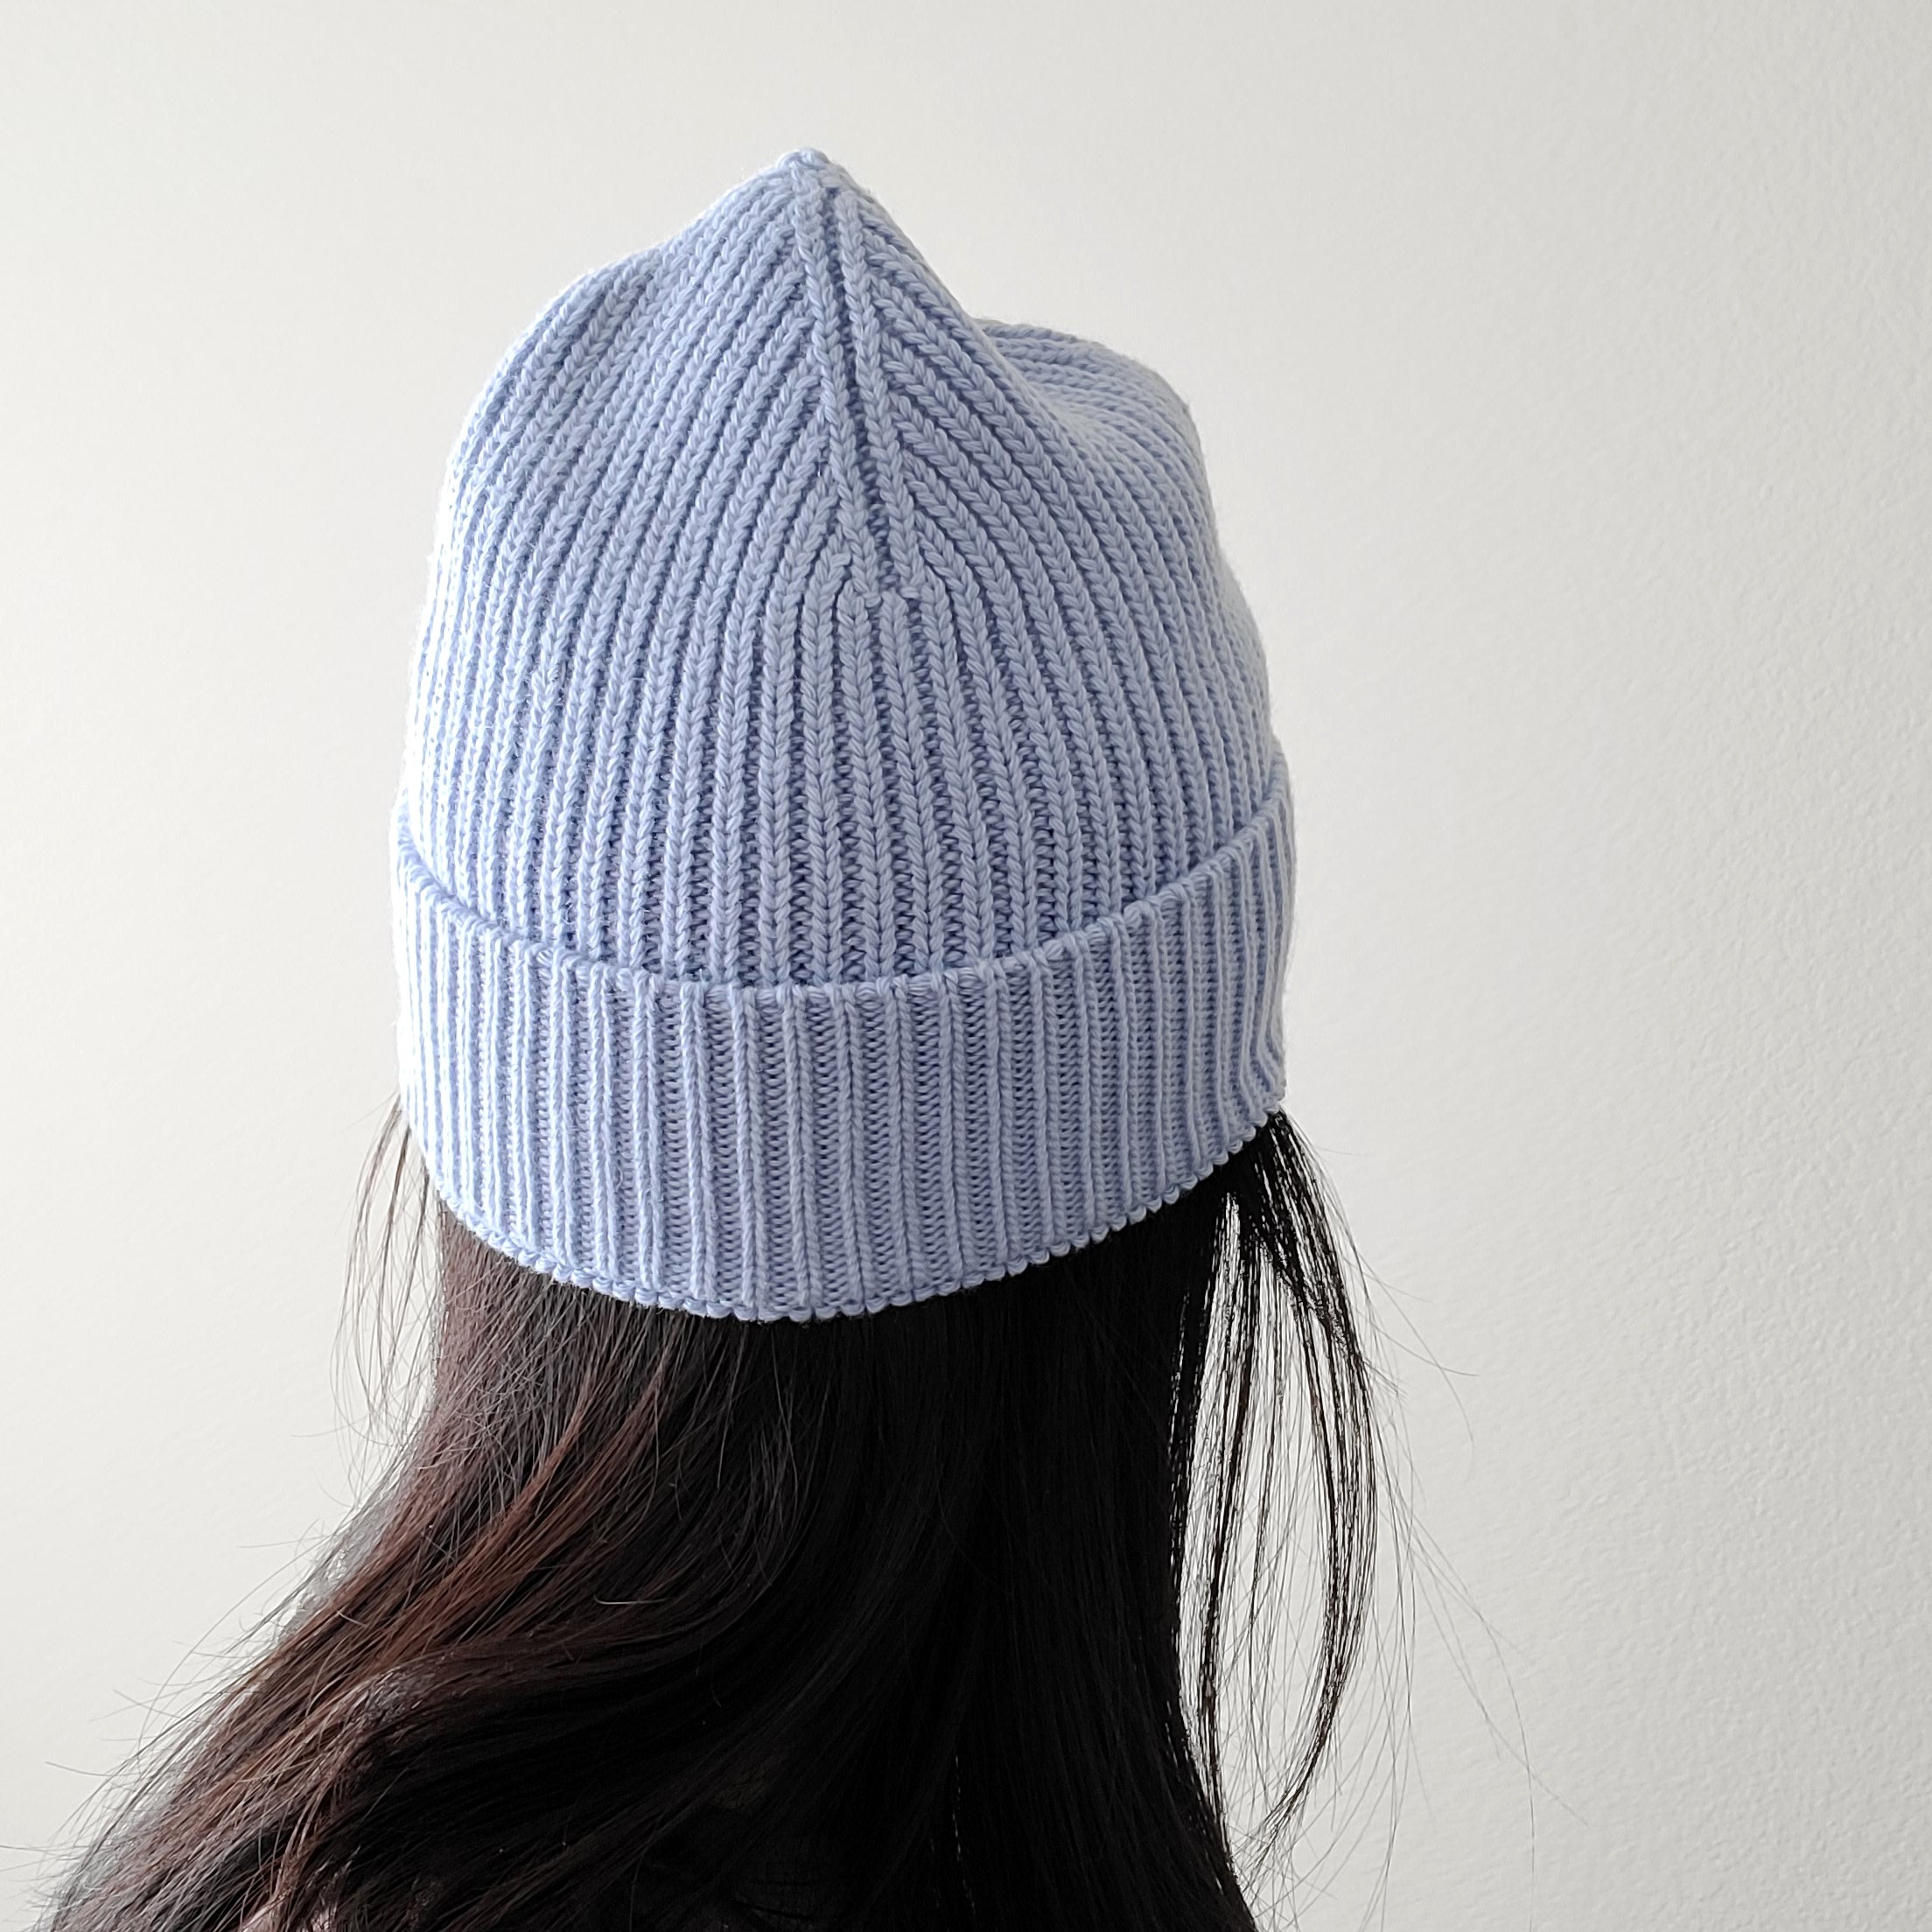 Beanie - hand knit super soft Merino wool hat